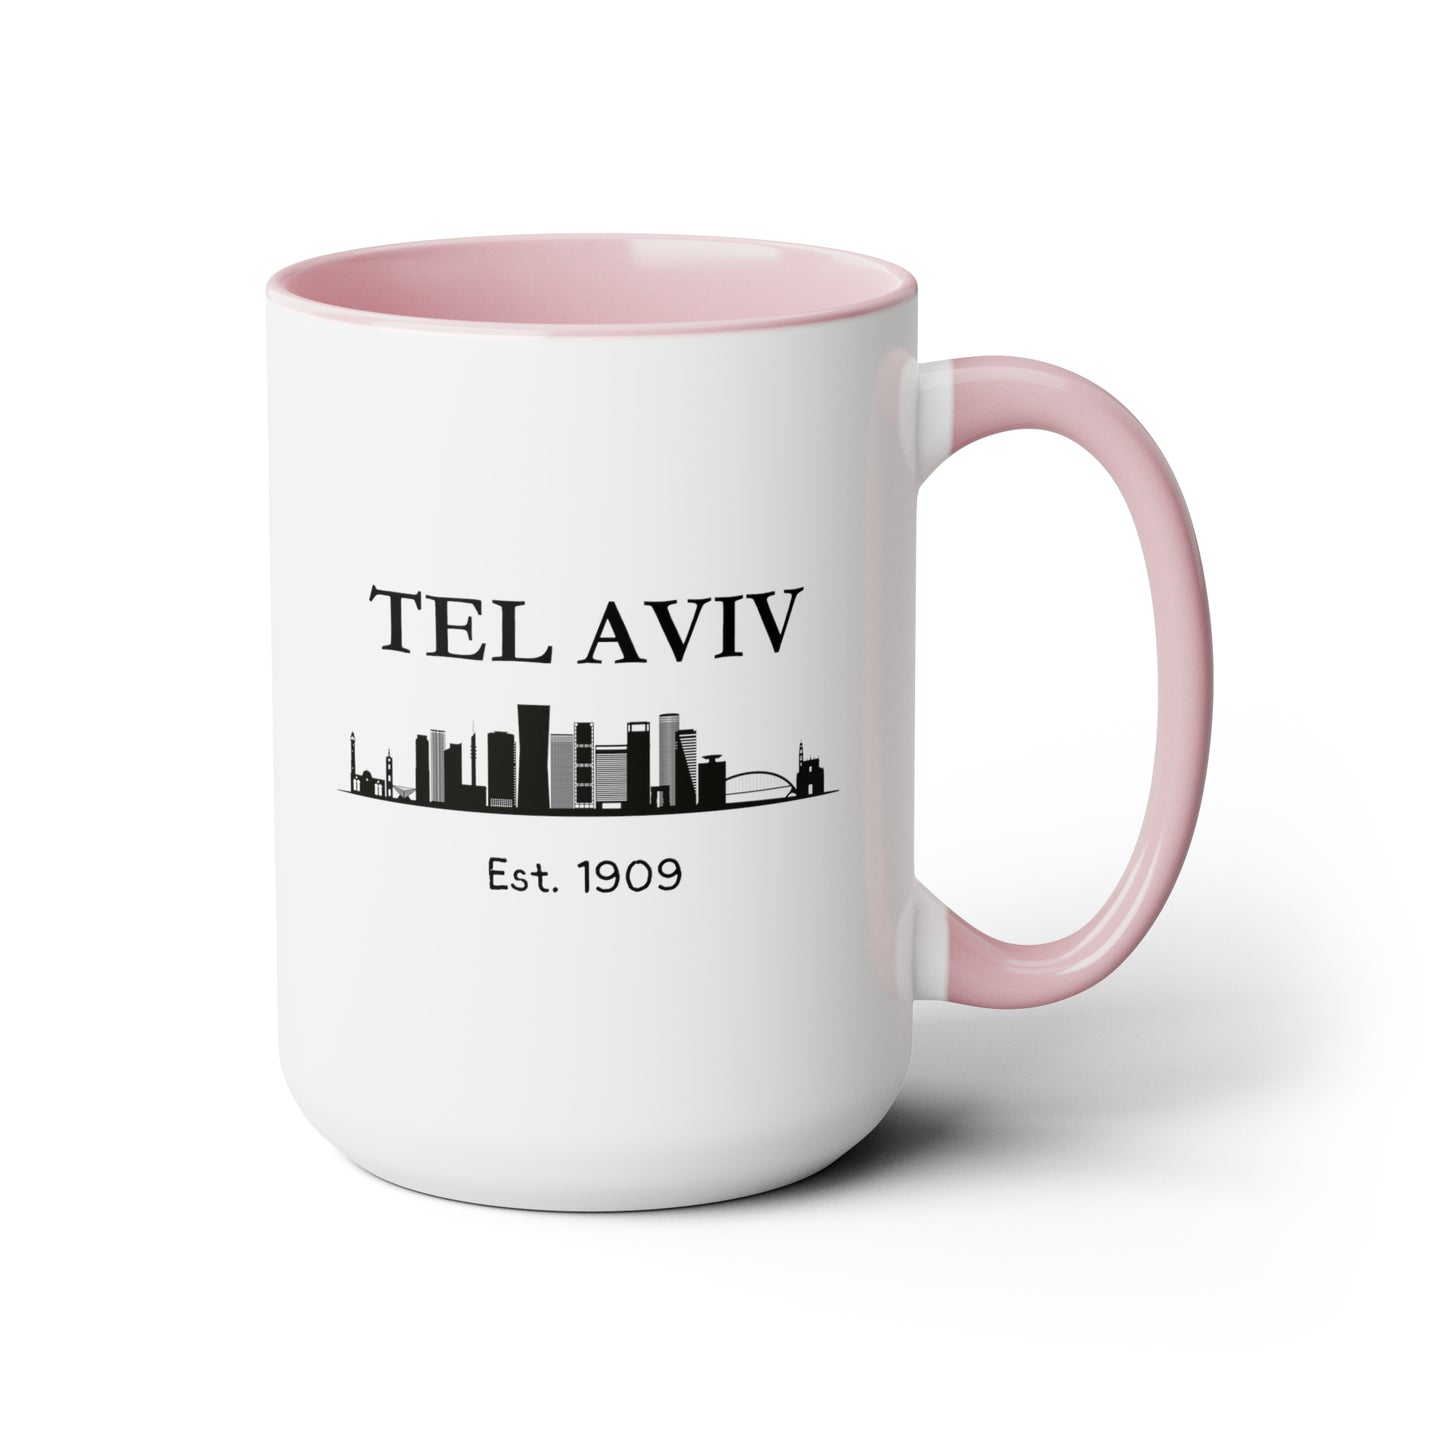 Tel Aviv - Est. 1909 - Accent Coffee Mug, 15oz